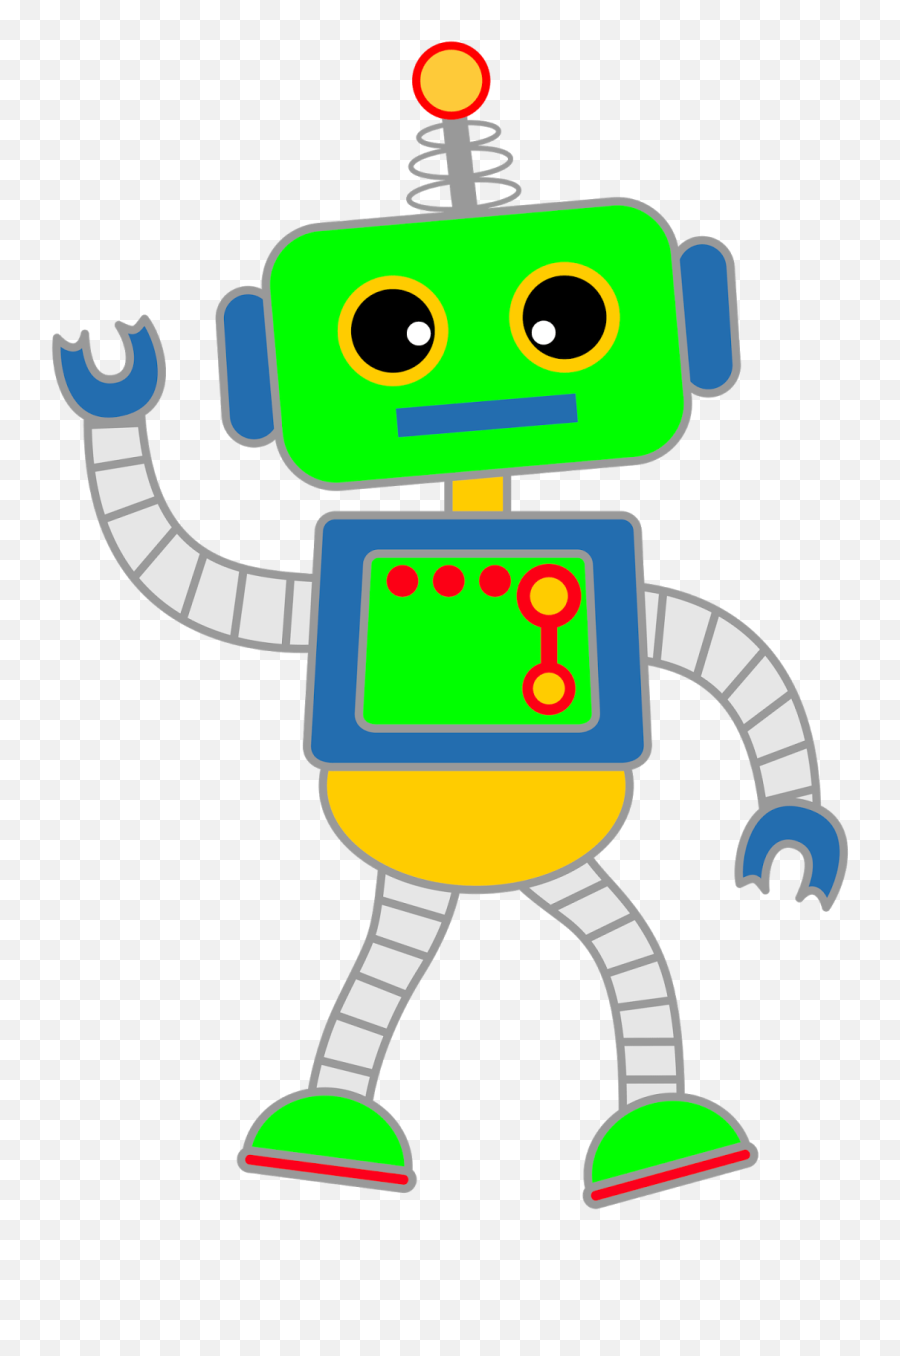 Clipart Of A Robot - Clipart Of Robot Emoji,Robot Emoji Iphone